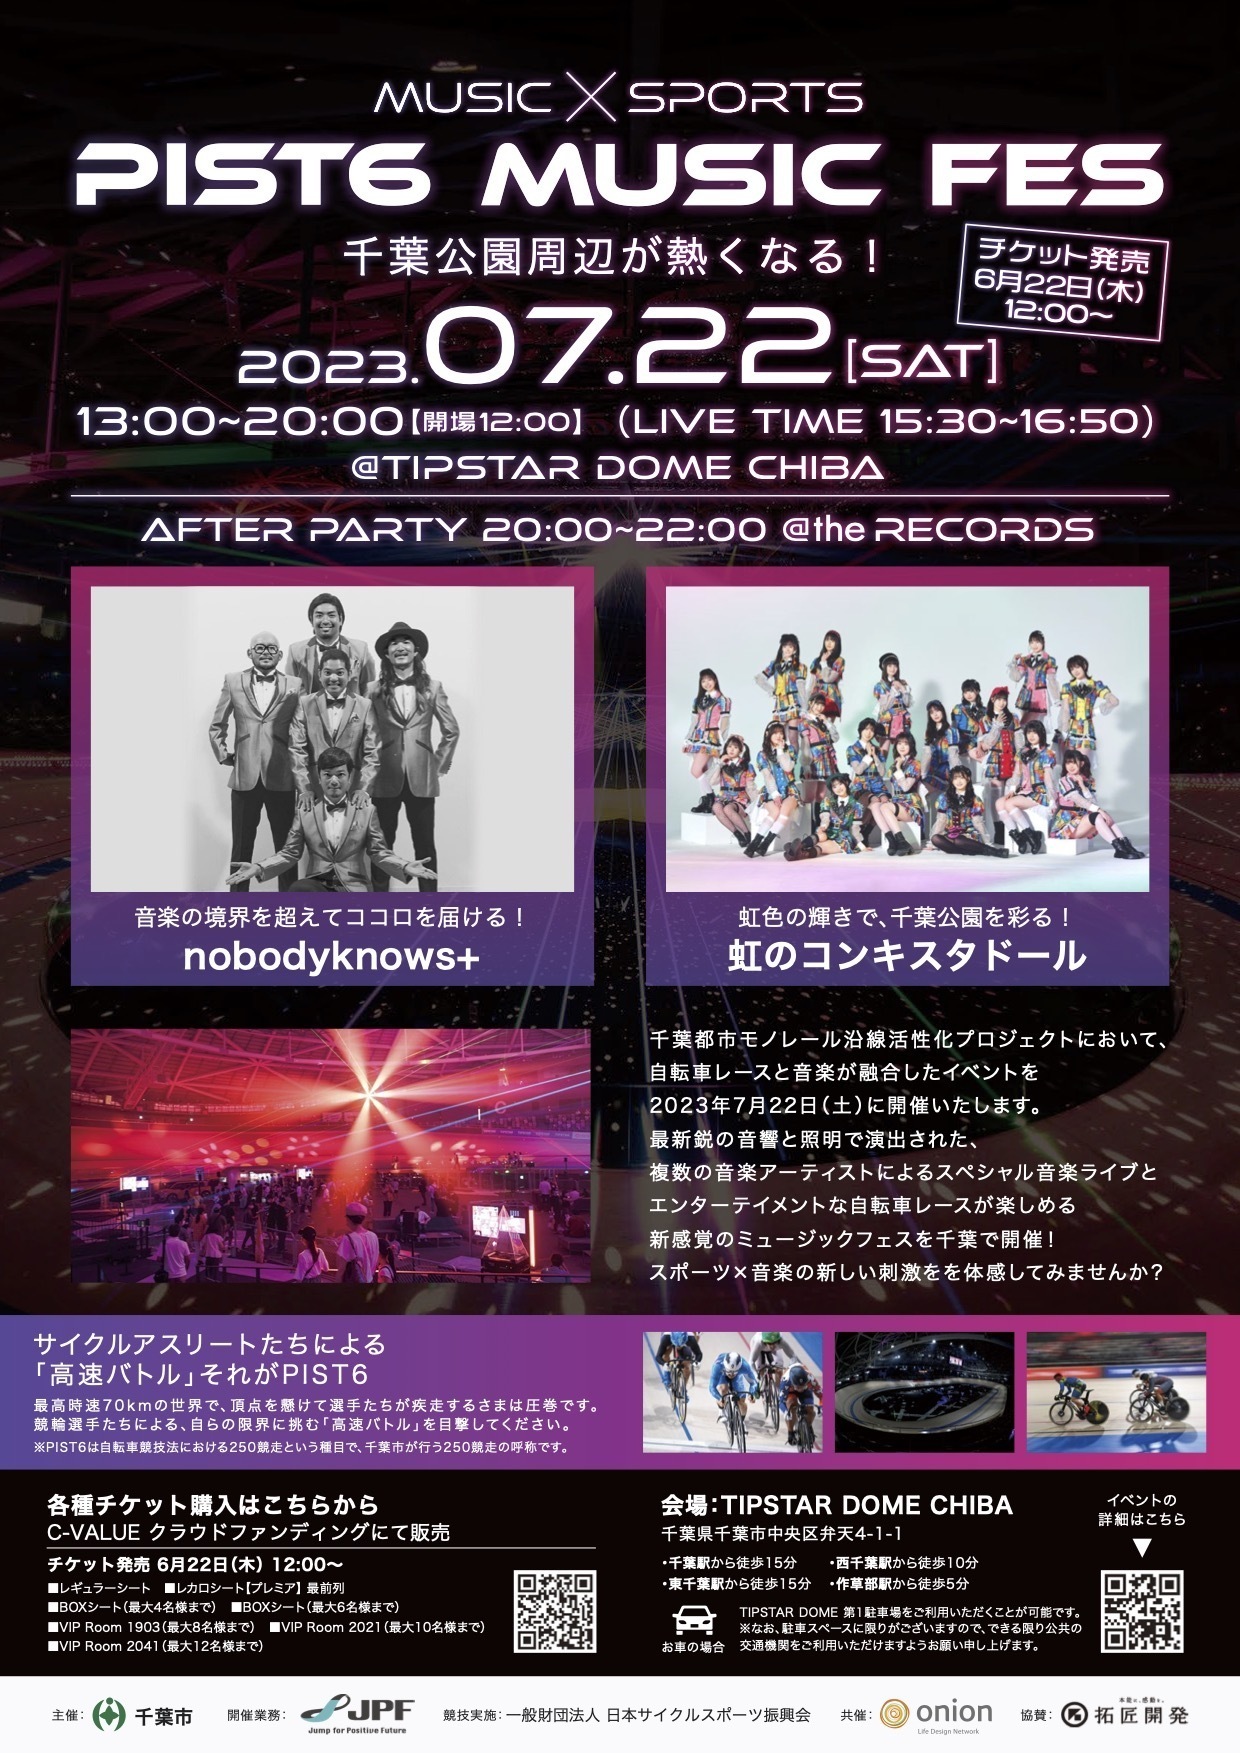 nobodyknows+】2023.7.22(土) 『PIST6 MUSIC FES』@千葉・TIPSTAR DOME 